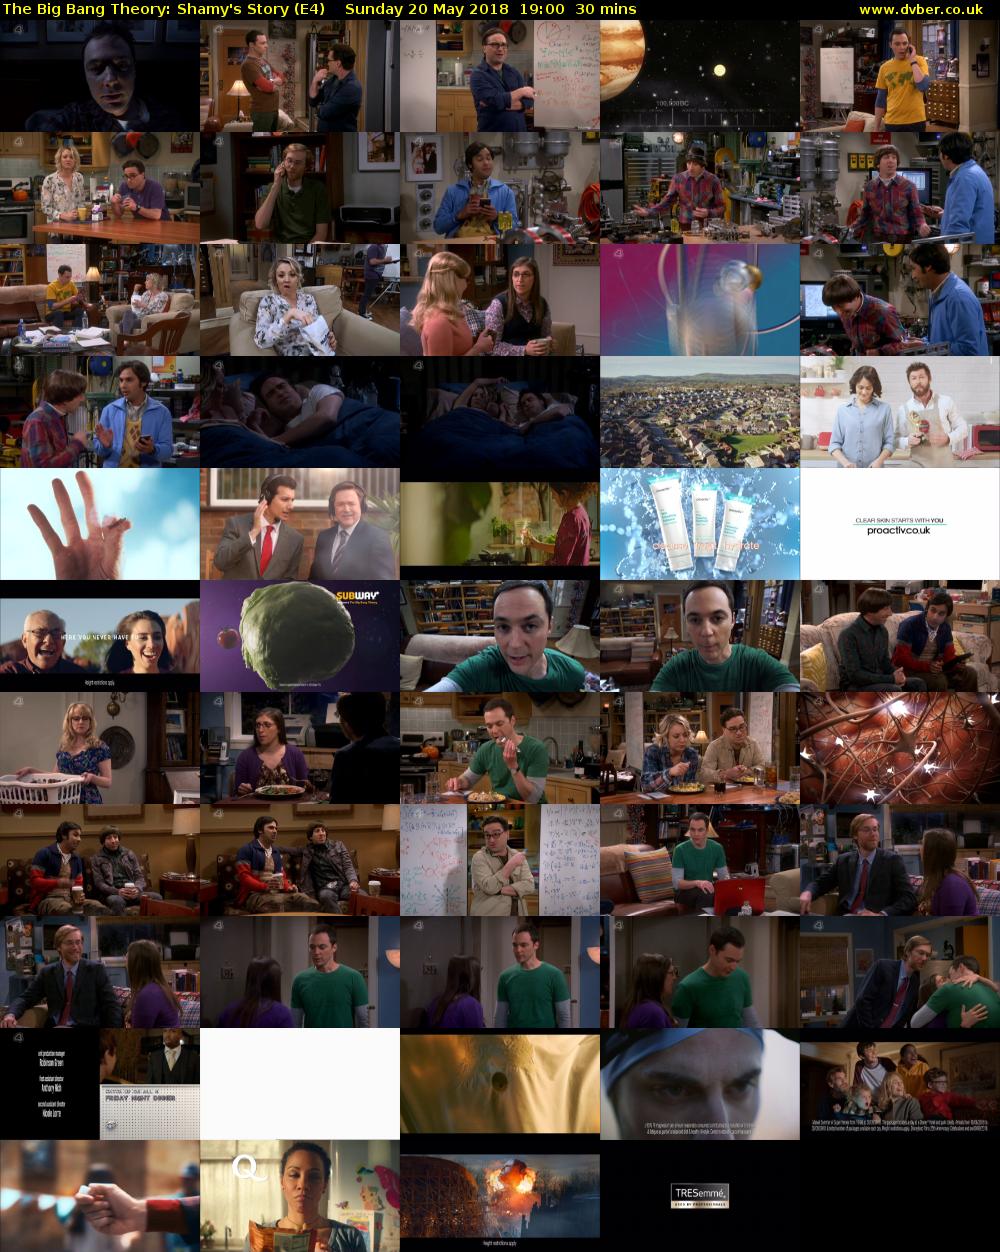 The Big Bang Theory: Shamy's Story (E4) Sunday 20 May 2018 19:00 - 19:30